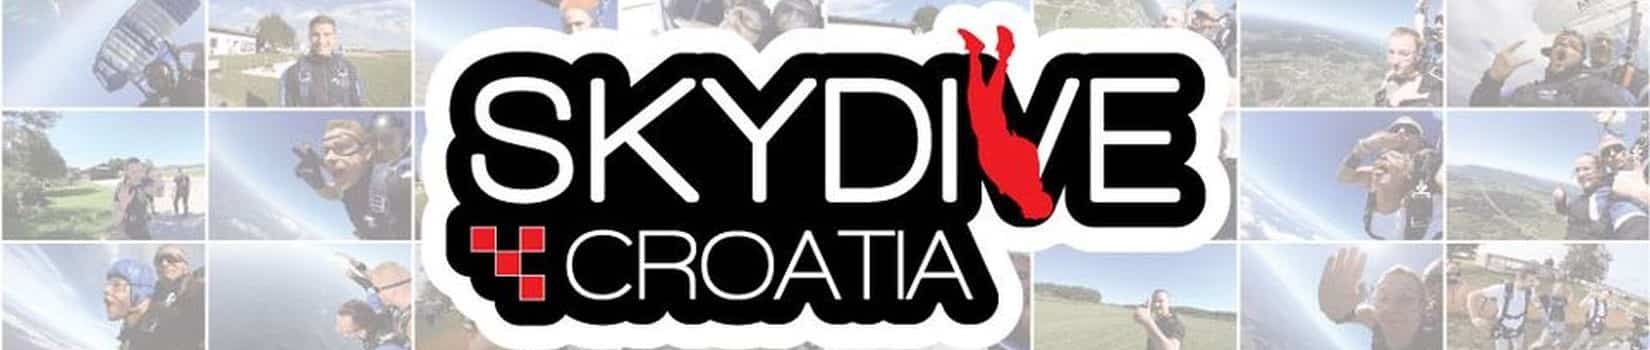 Skydive Croatia